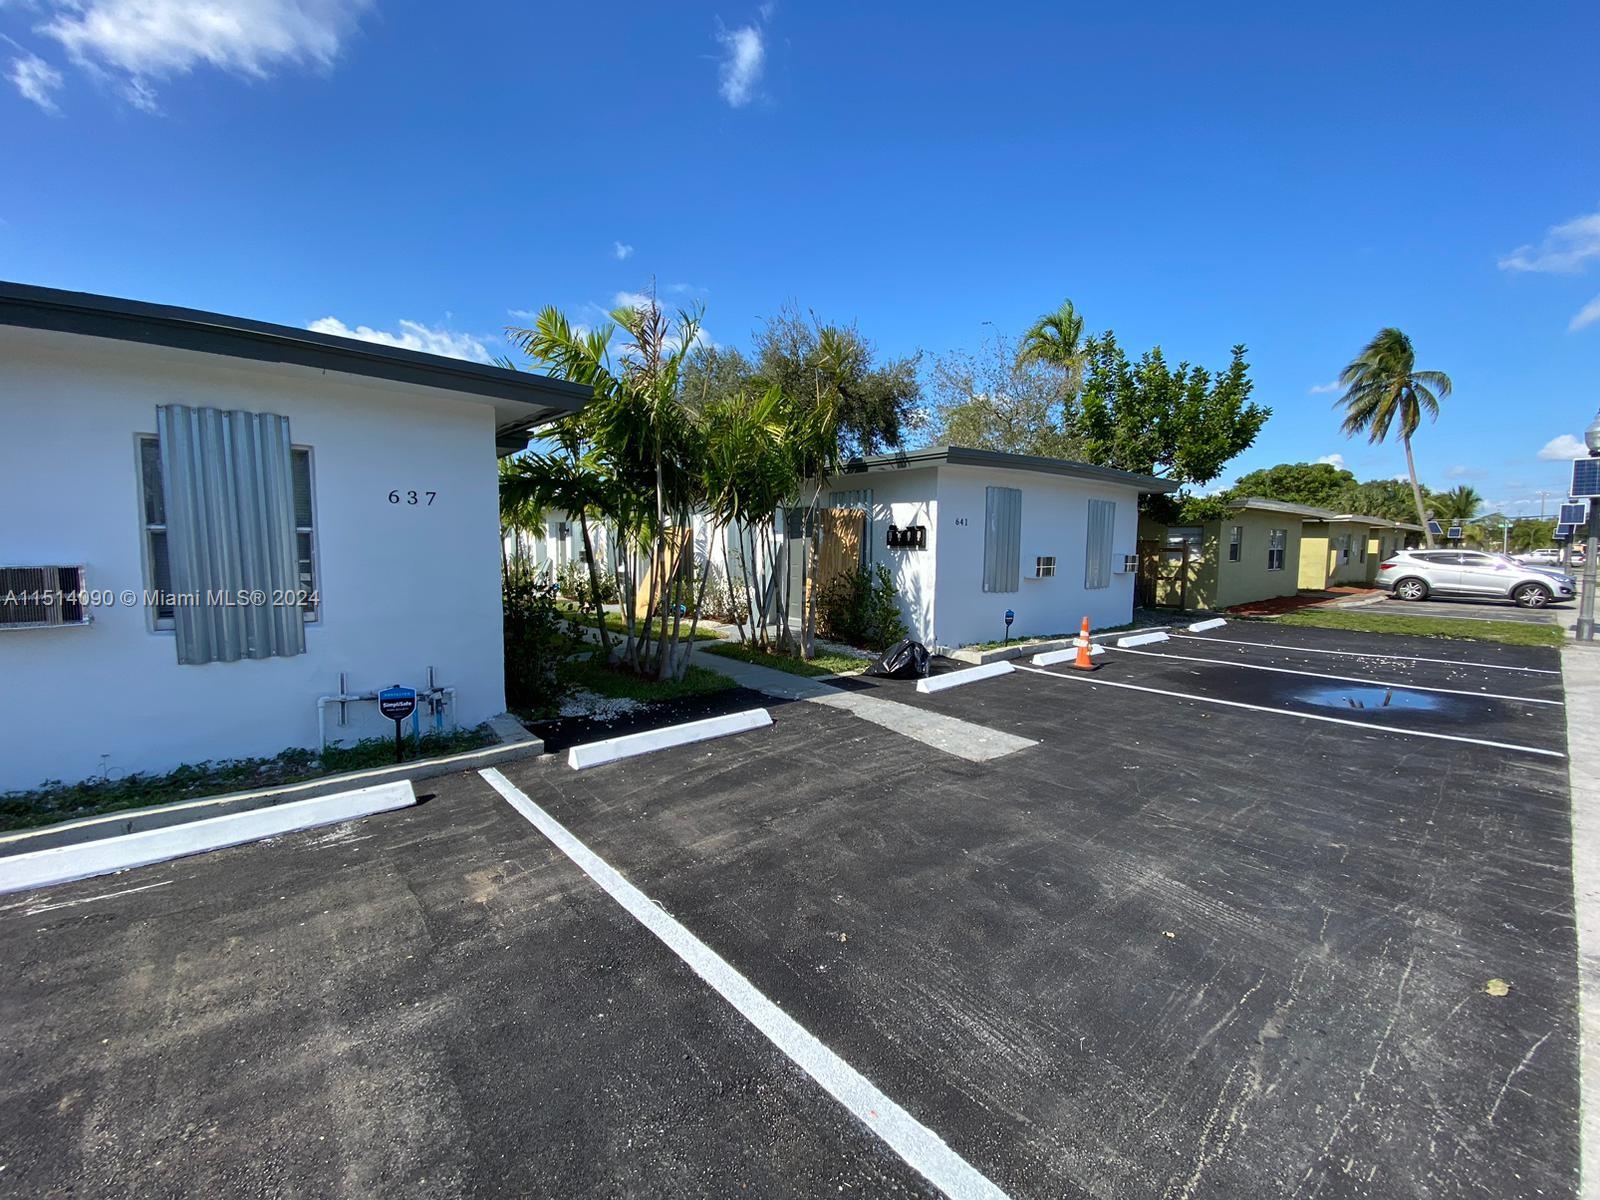 Rental Property at 637 Nw 15 Ter Ter, Fort Lauderdale, Broward County, Florida -  - $1,580,000 MO.